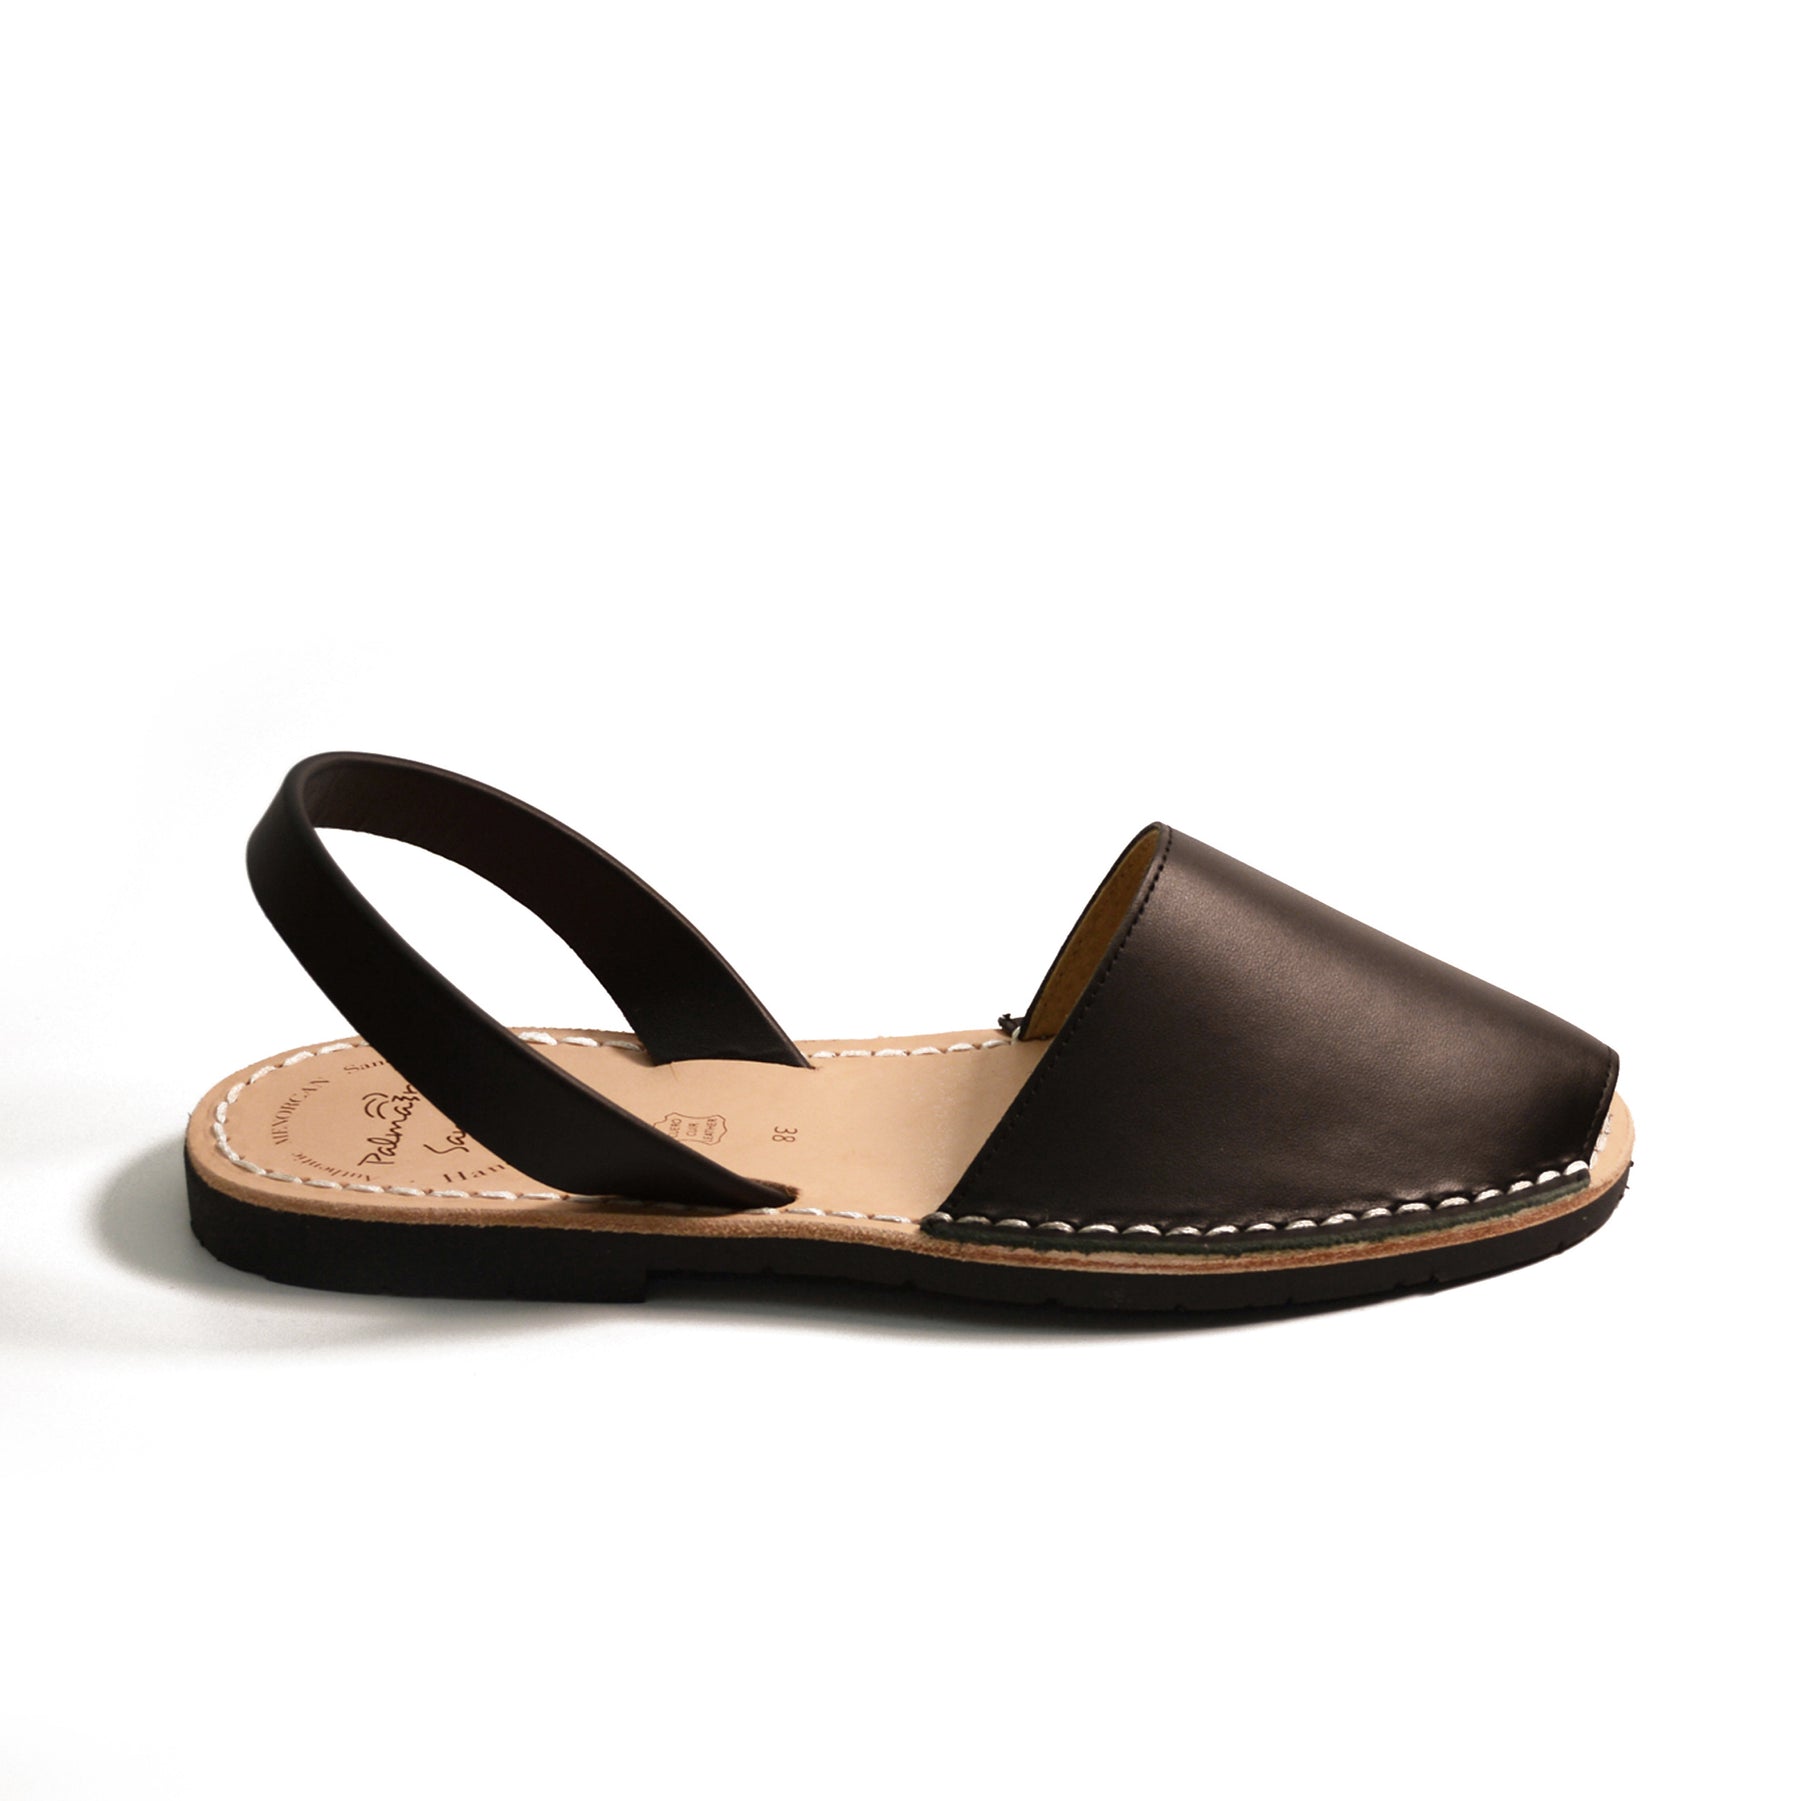 Black leather Spanish menorcan avarcas sandals